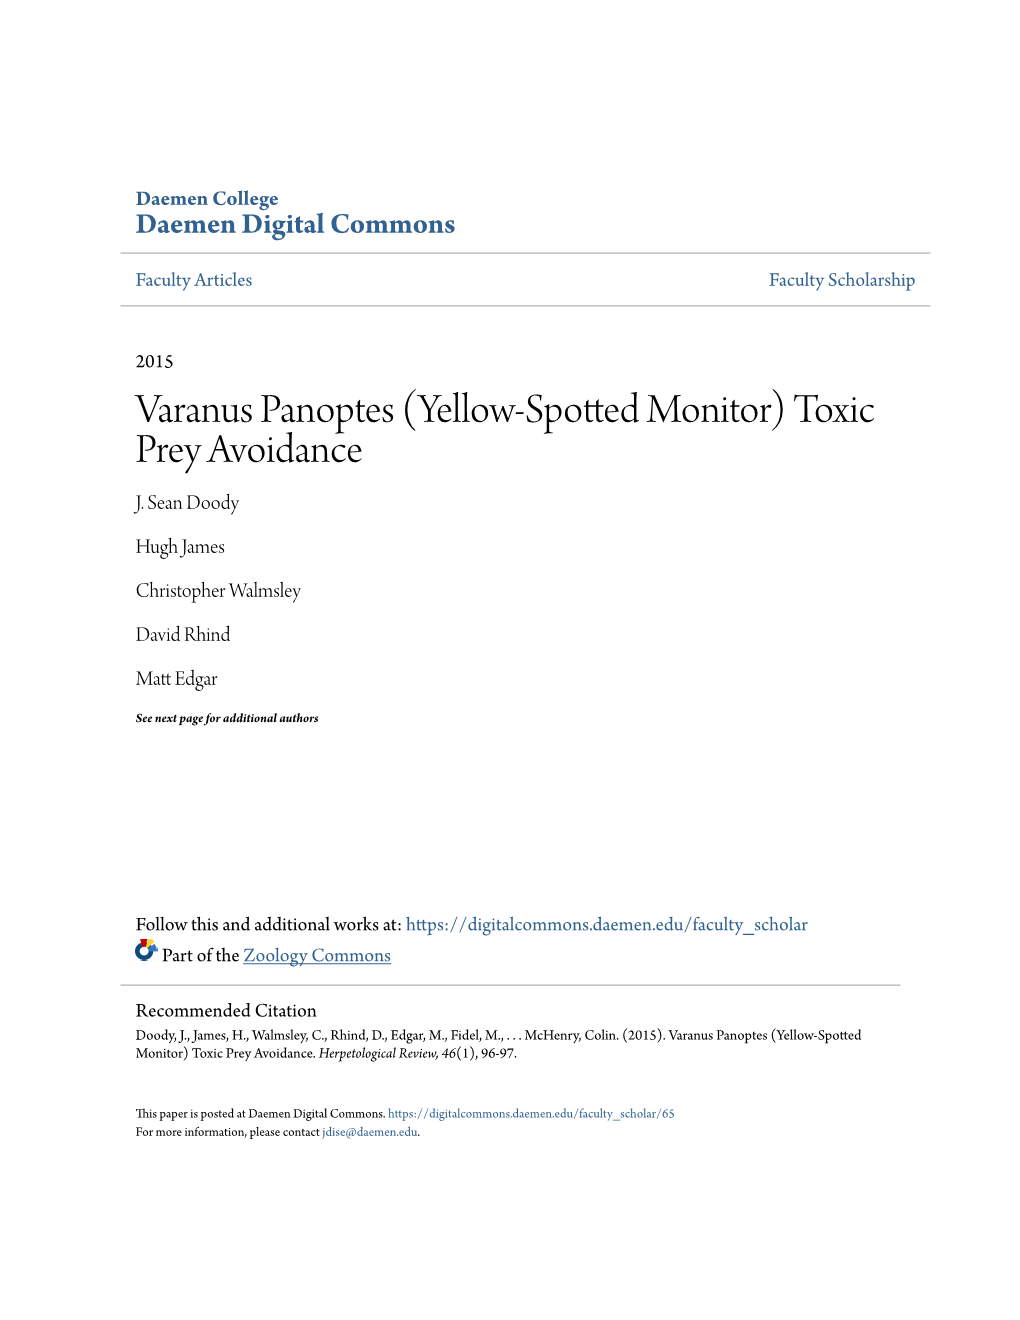 Varanus Panoptes (Yellow-Spotted Monitor) Toxic Prey Avoidance J